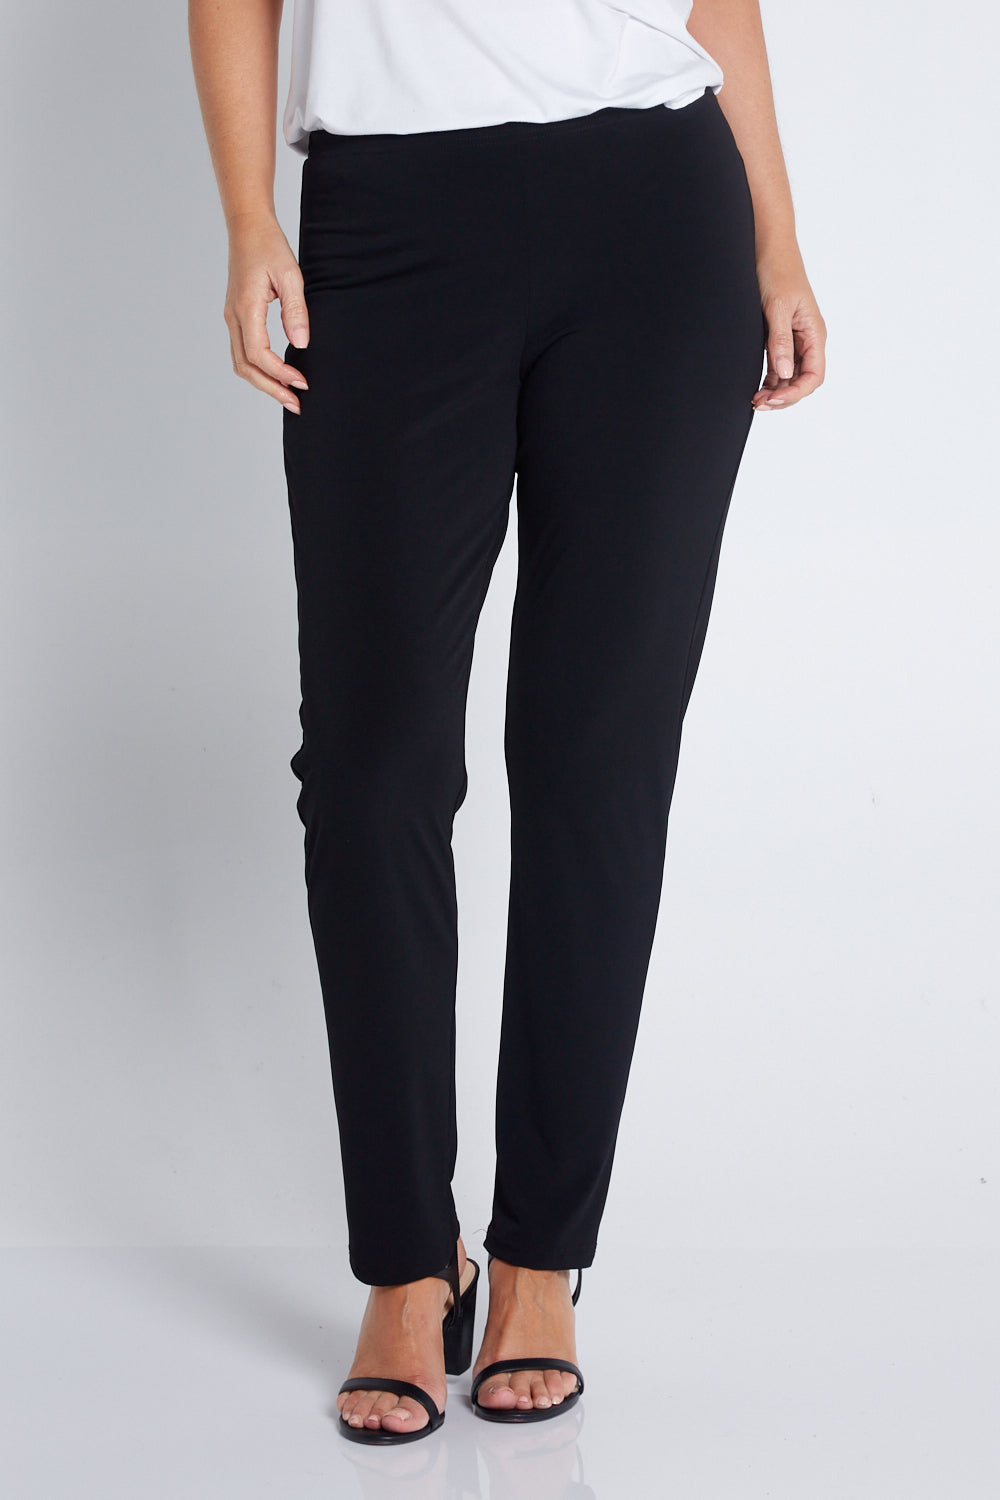 TULIO fashion, Gianna Tall Pants - Black